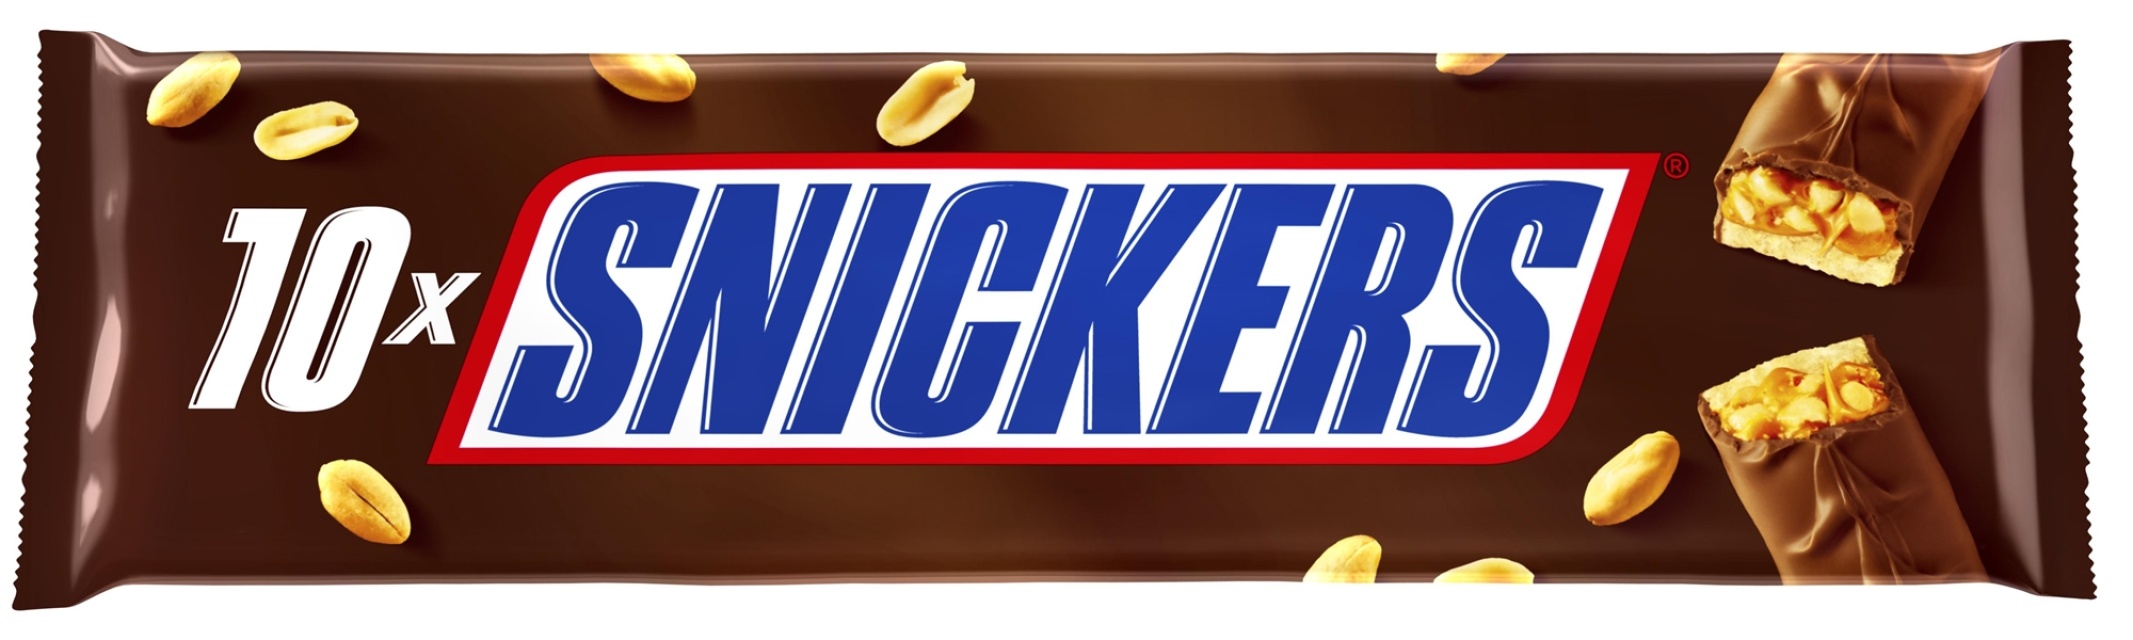 Шоколадка сникерс с именами. Белый Сникерс. Сникерс 10. Сникерс 10x. Сникерс белый шоколад.